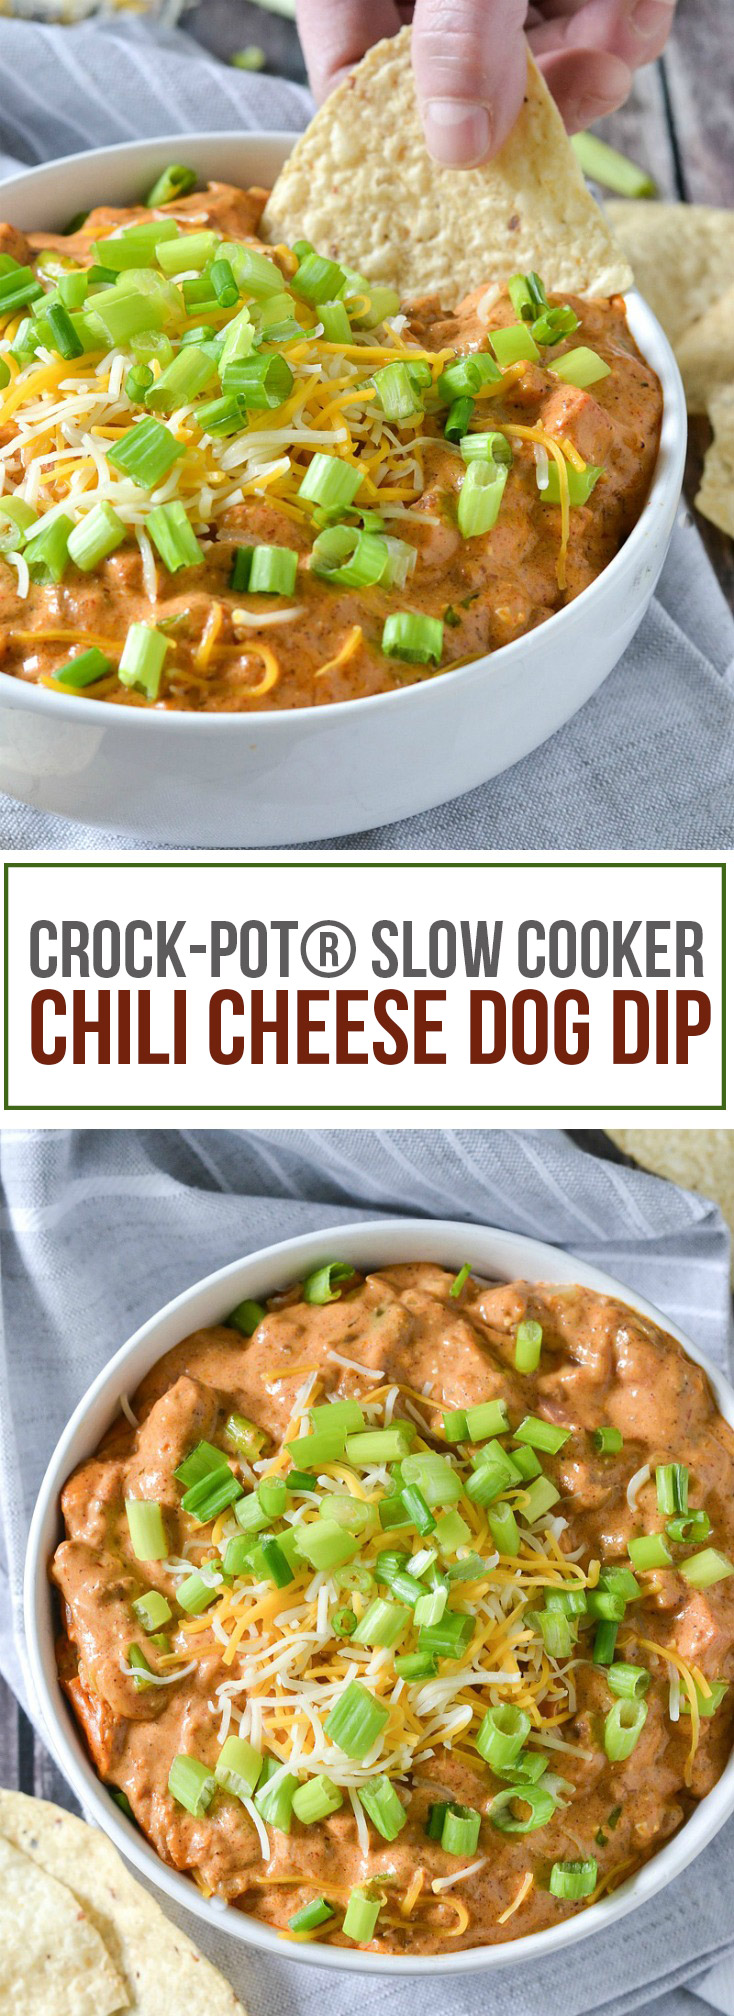 Crock-Pot® Slow Cooker Chili Cheese Dog Dip #crockpotrecipes #ad